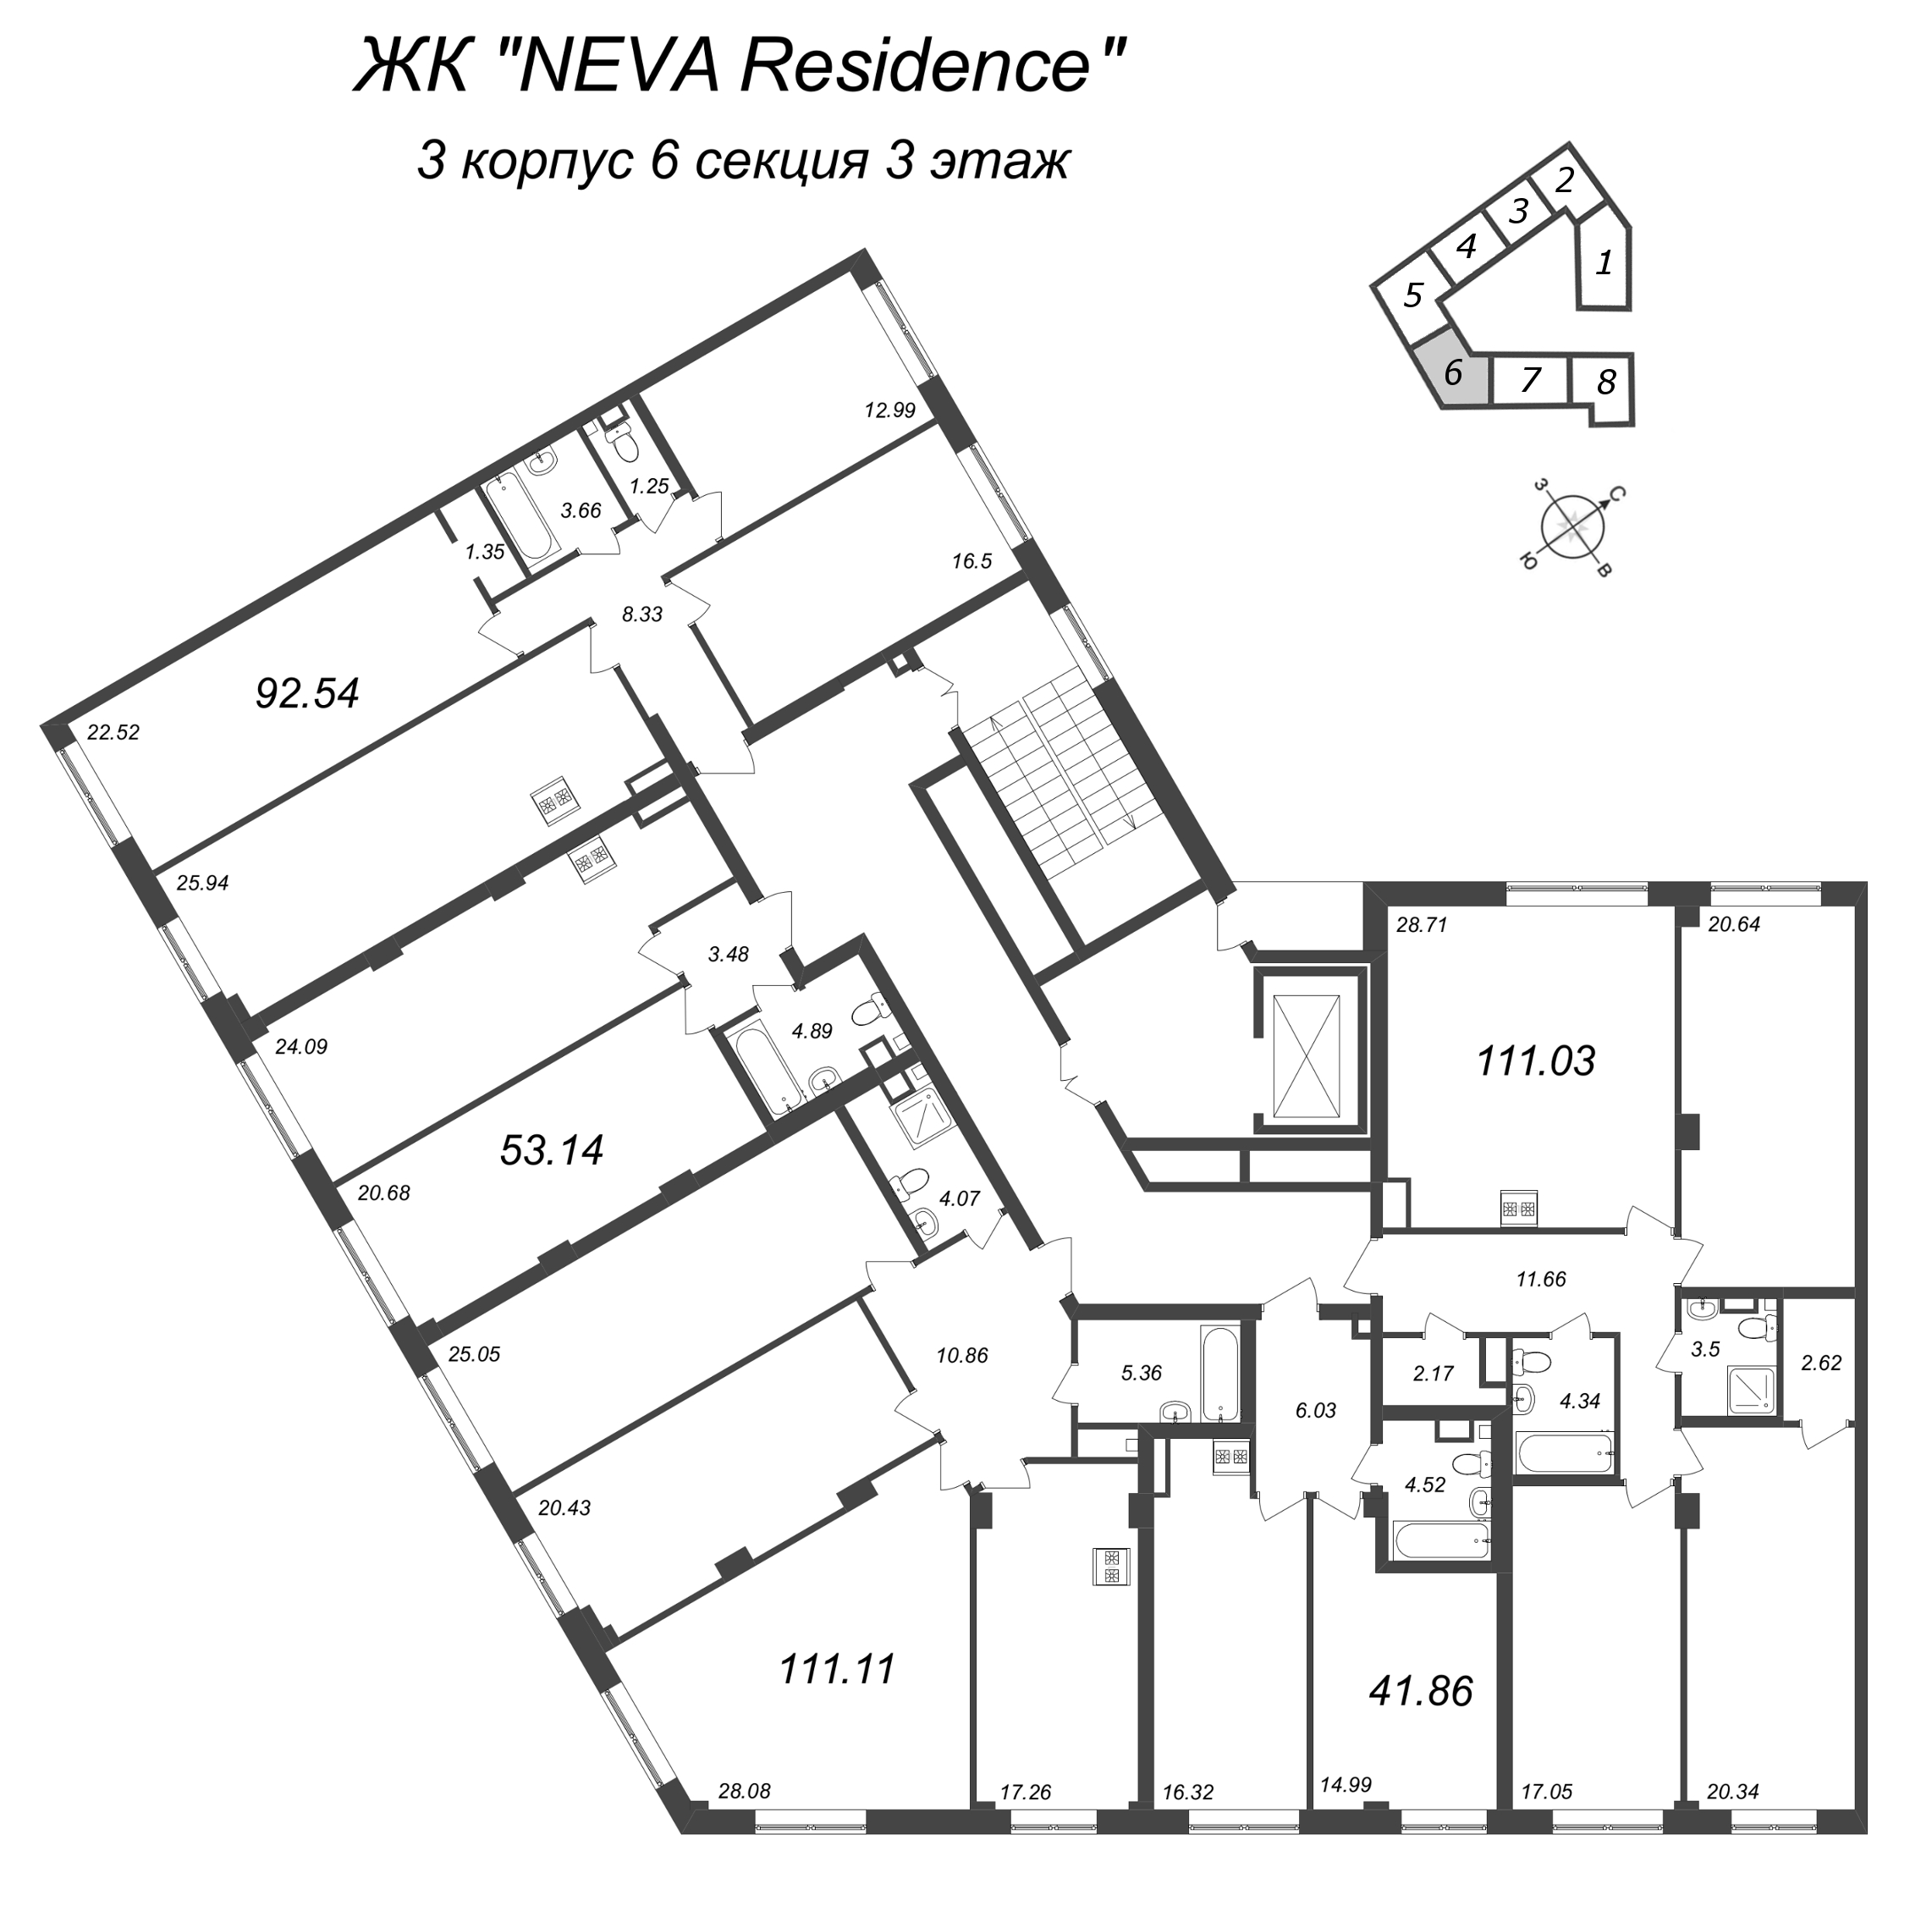 4-комнатная (Евро) квартира, 92.54 м² - планировка этажа